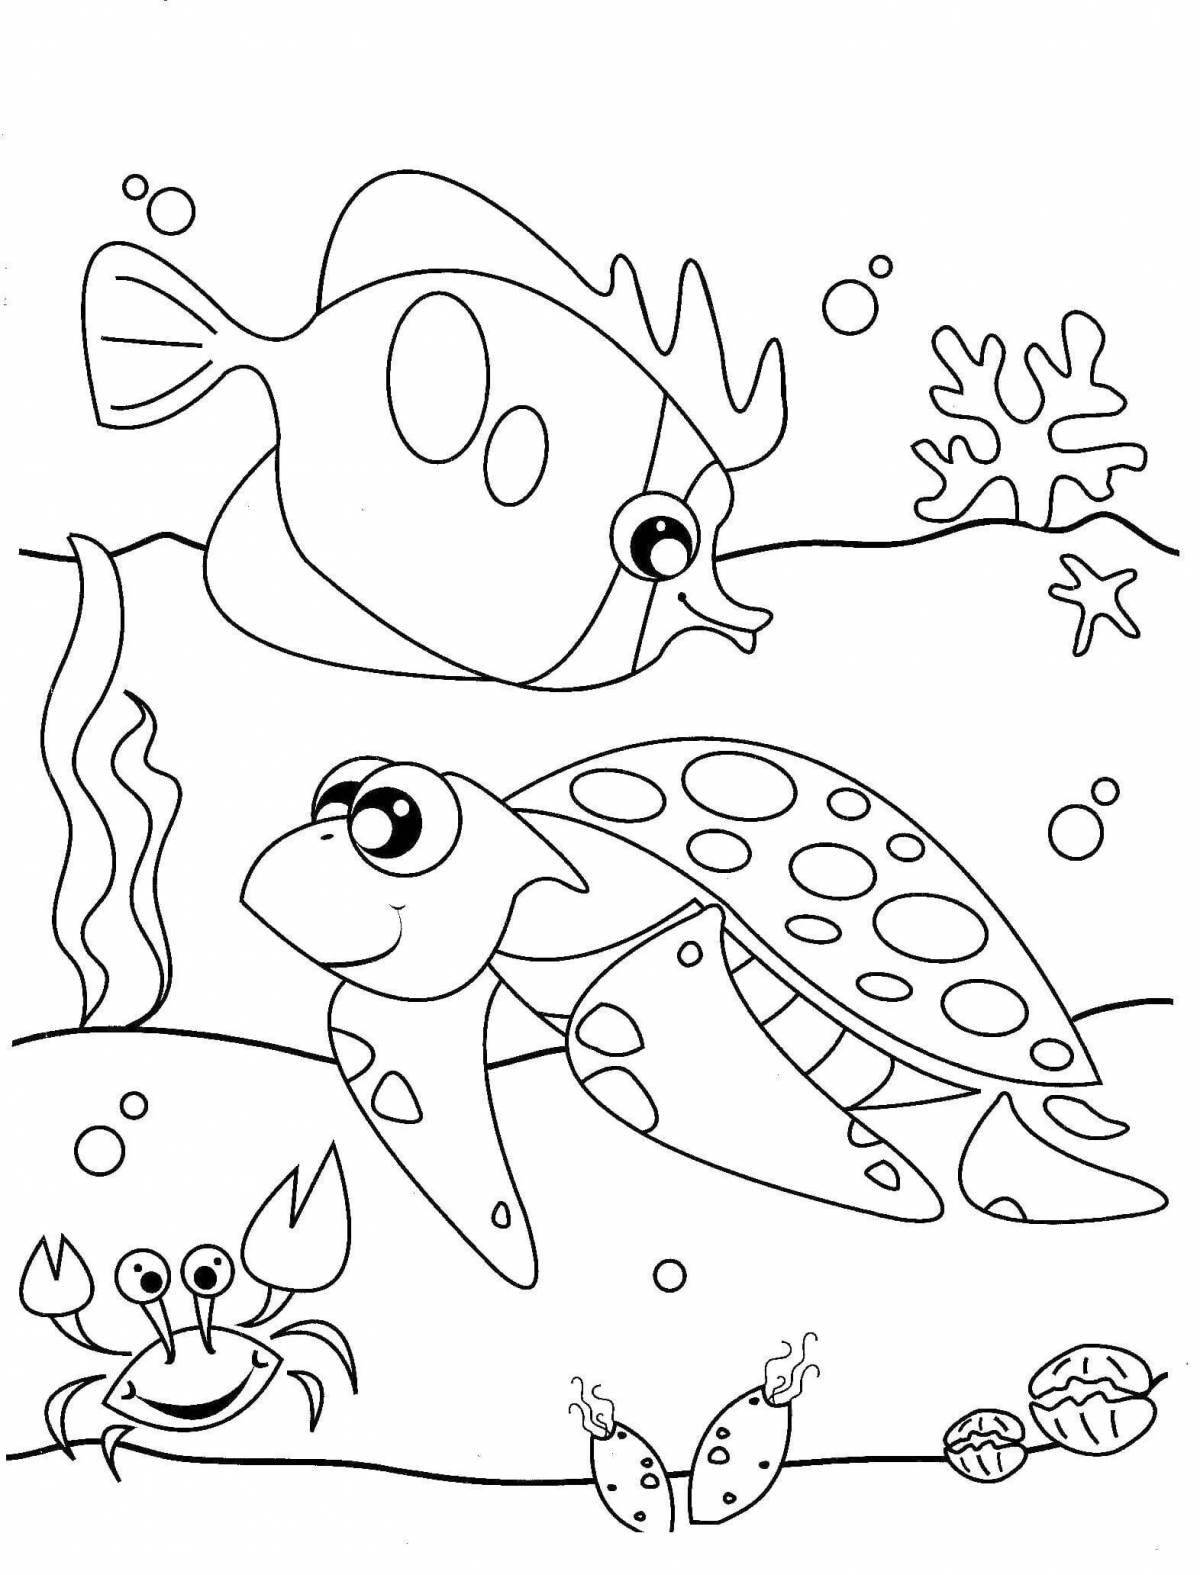 Coloring page inviting sea world